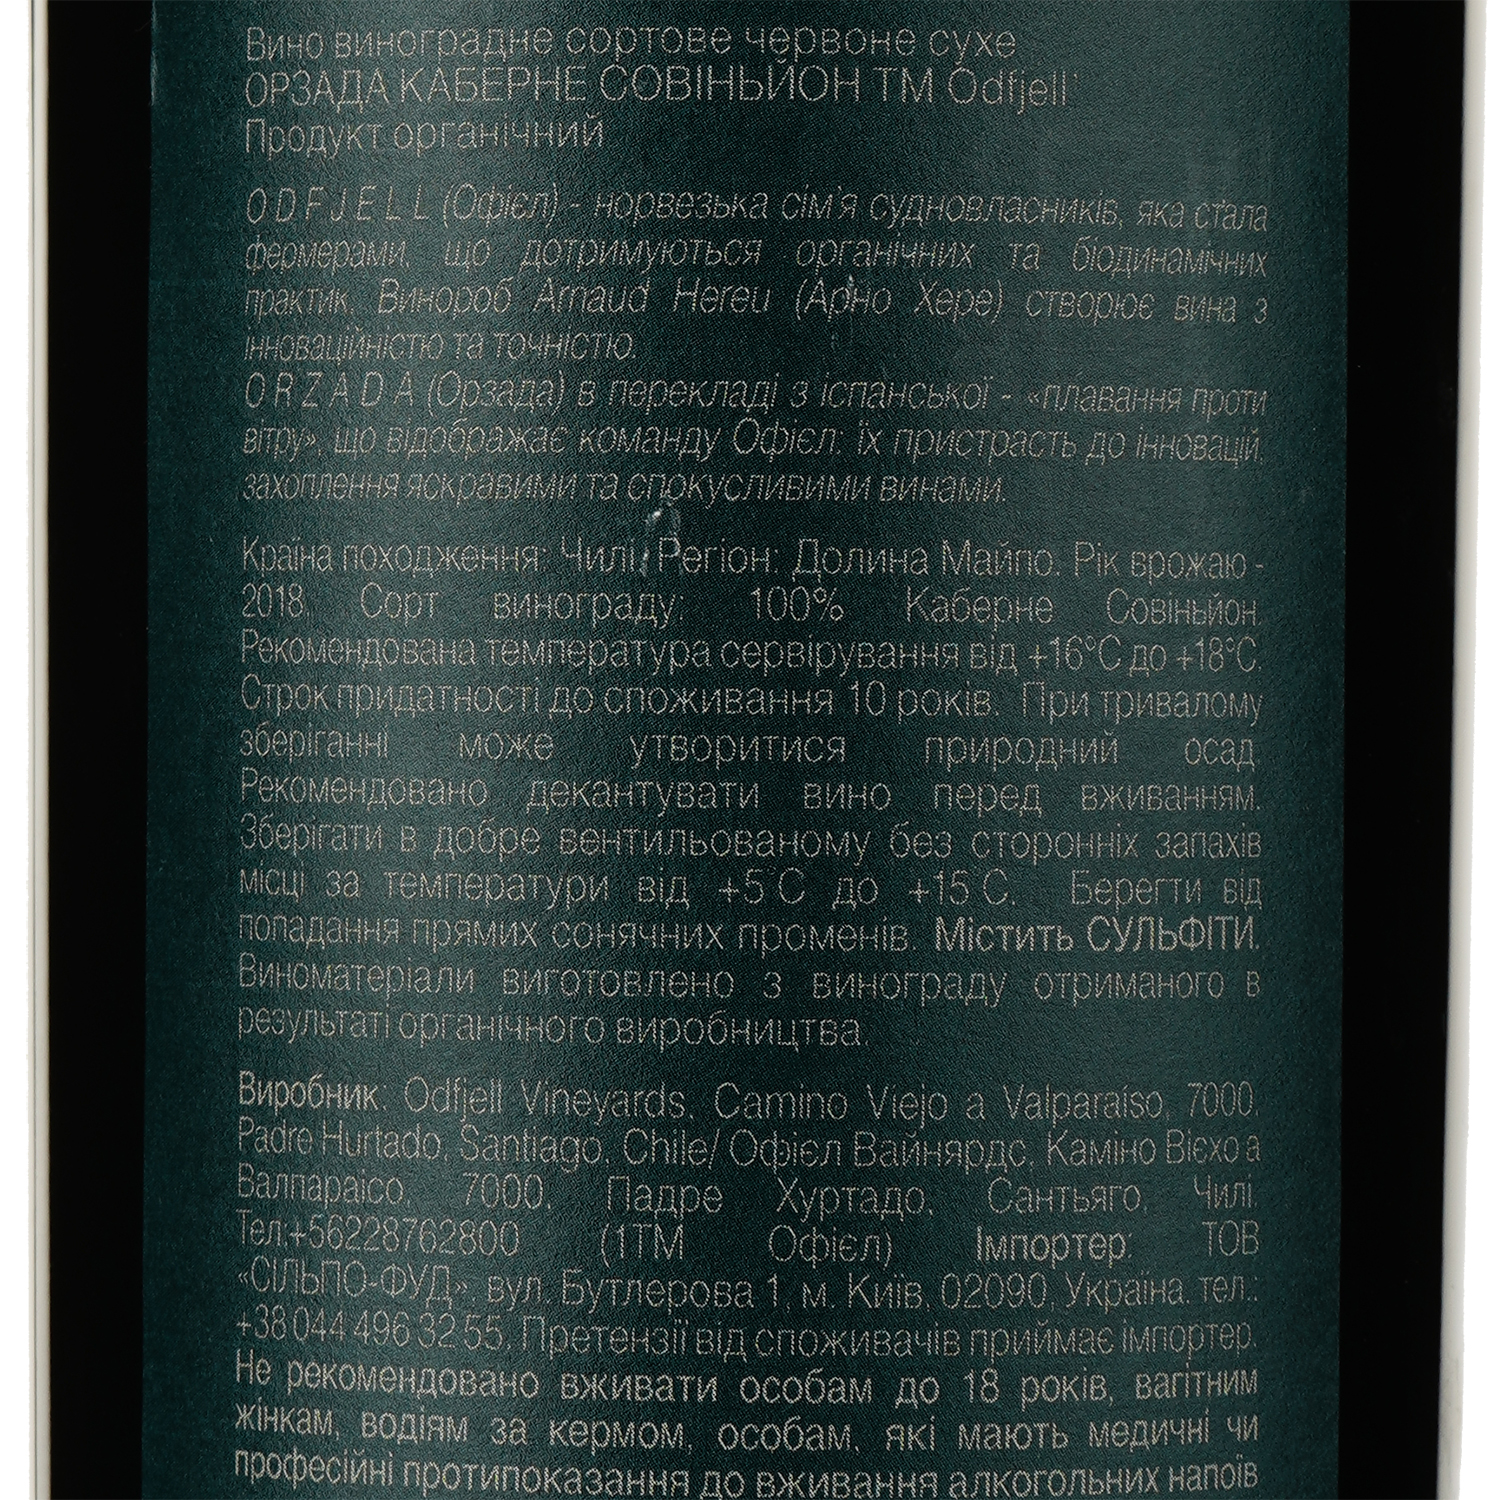 Вино Odfjell Orzada Premium Cabernet Sauvignon, красное, сухое, 13%, 0,75 л (871901) - фото 3